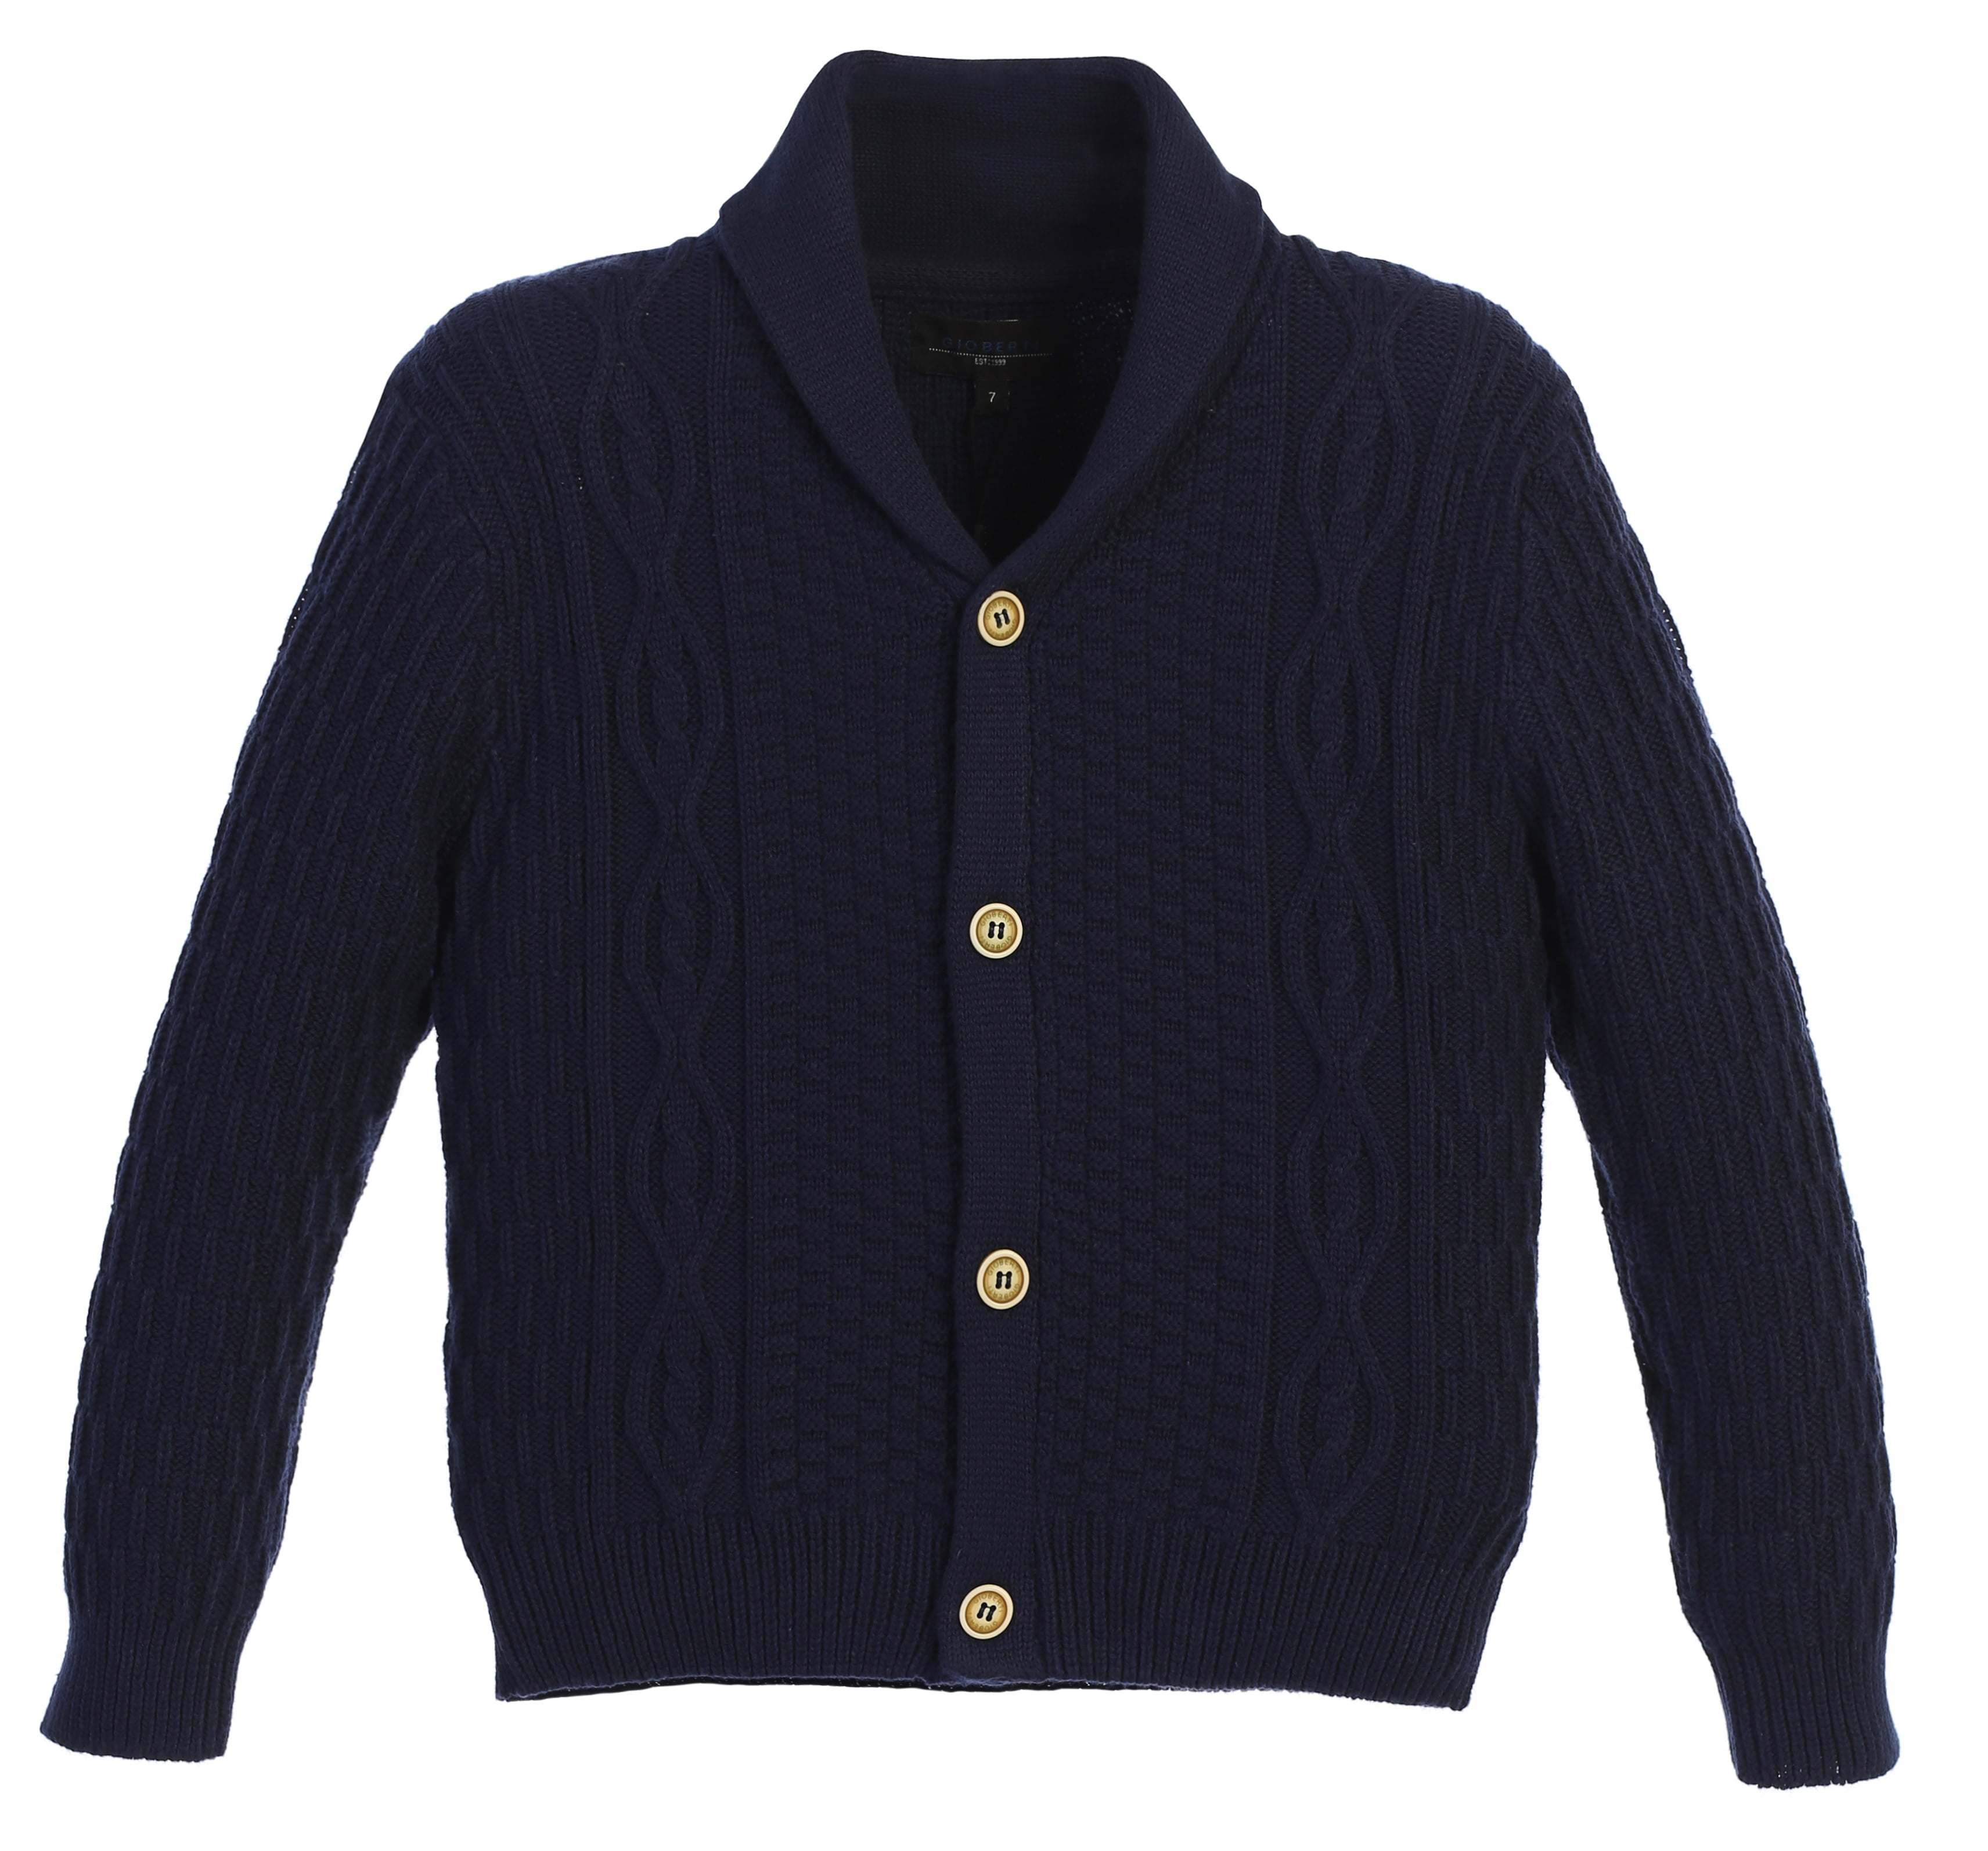 Gioberti Kids and Boys 100% Cotton Knitted Shawl Collar Cardigan Sweater 